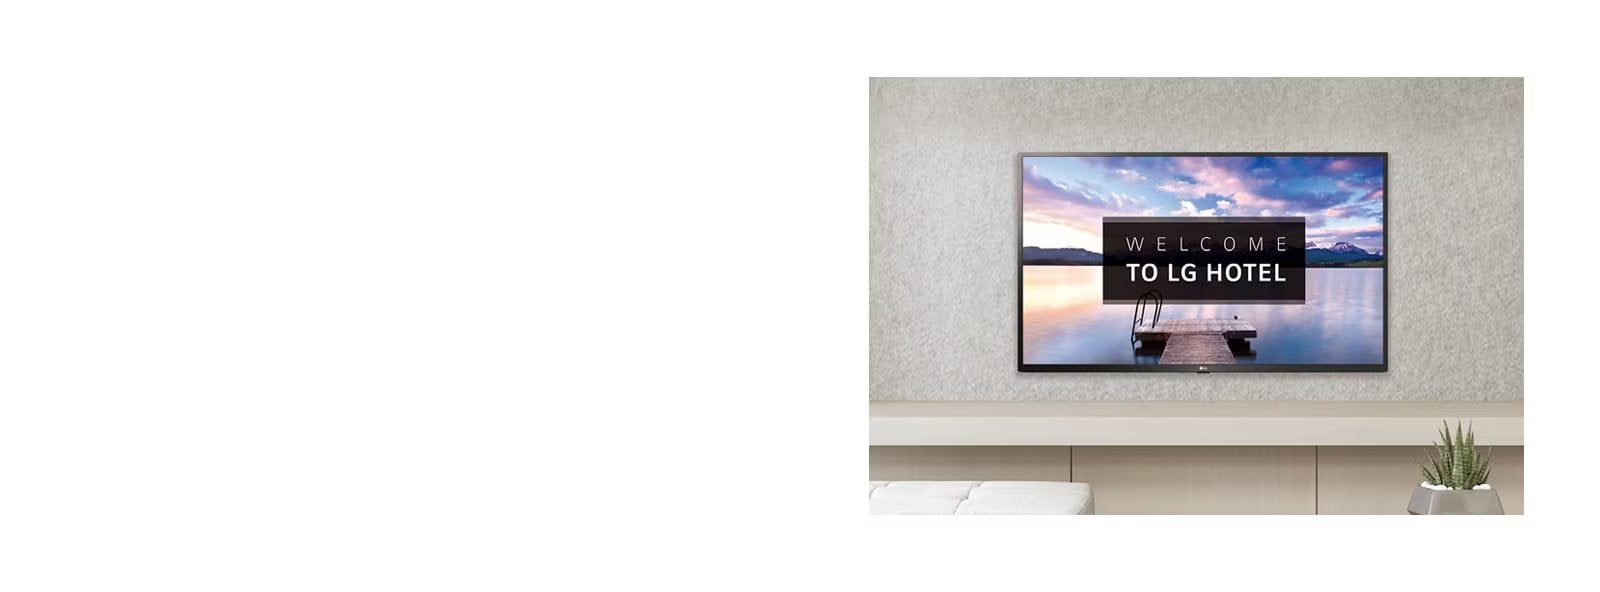 LG 55US662H 55" Pro:Centric Smart Hotel TV